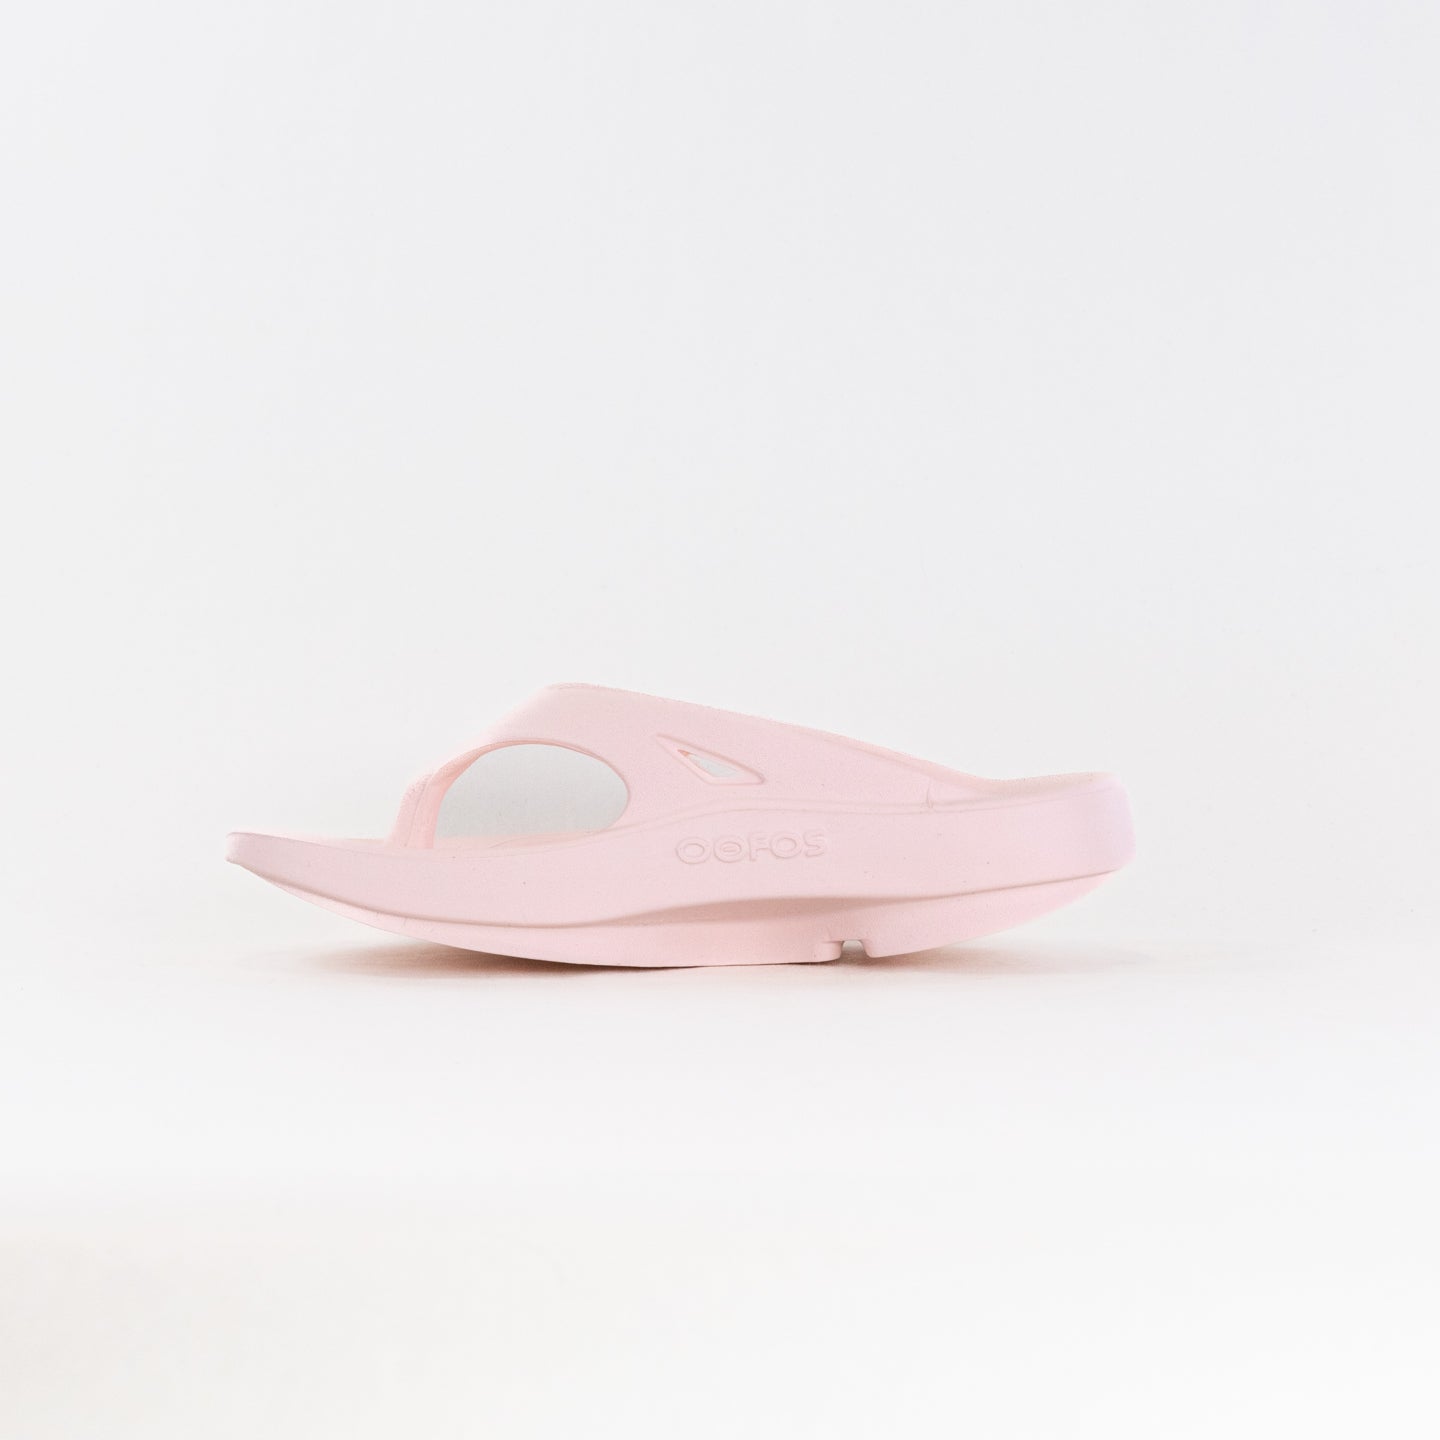 OOFOS Original Sandal (Women's) - Blush